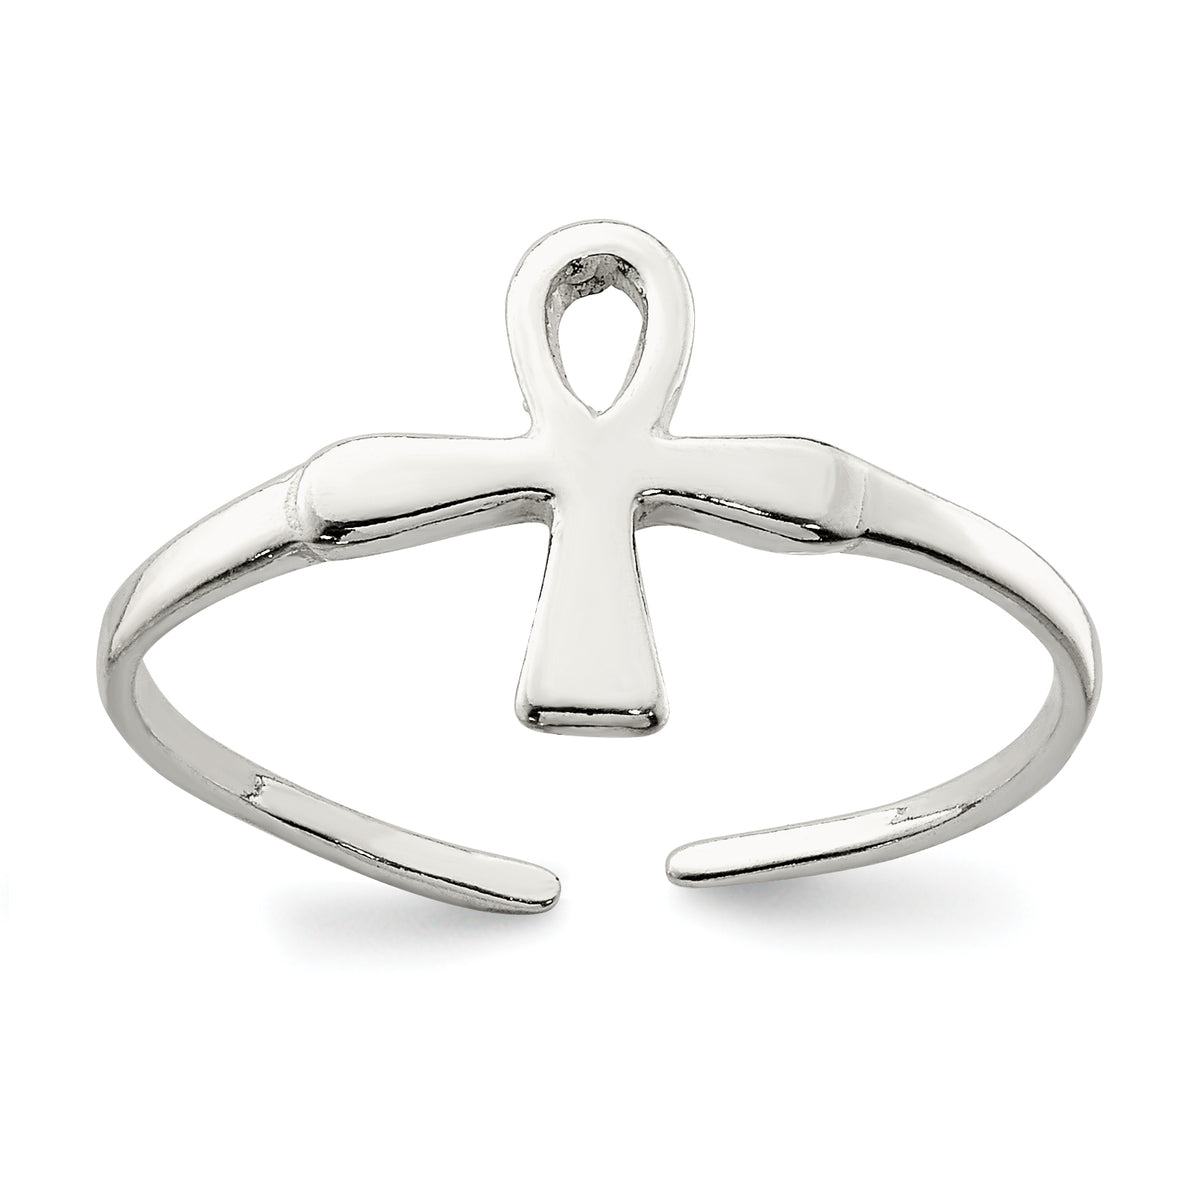 Sterling Silver Ankh (Egyptian Cross) Toe Ring